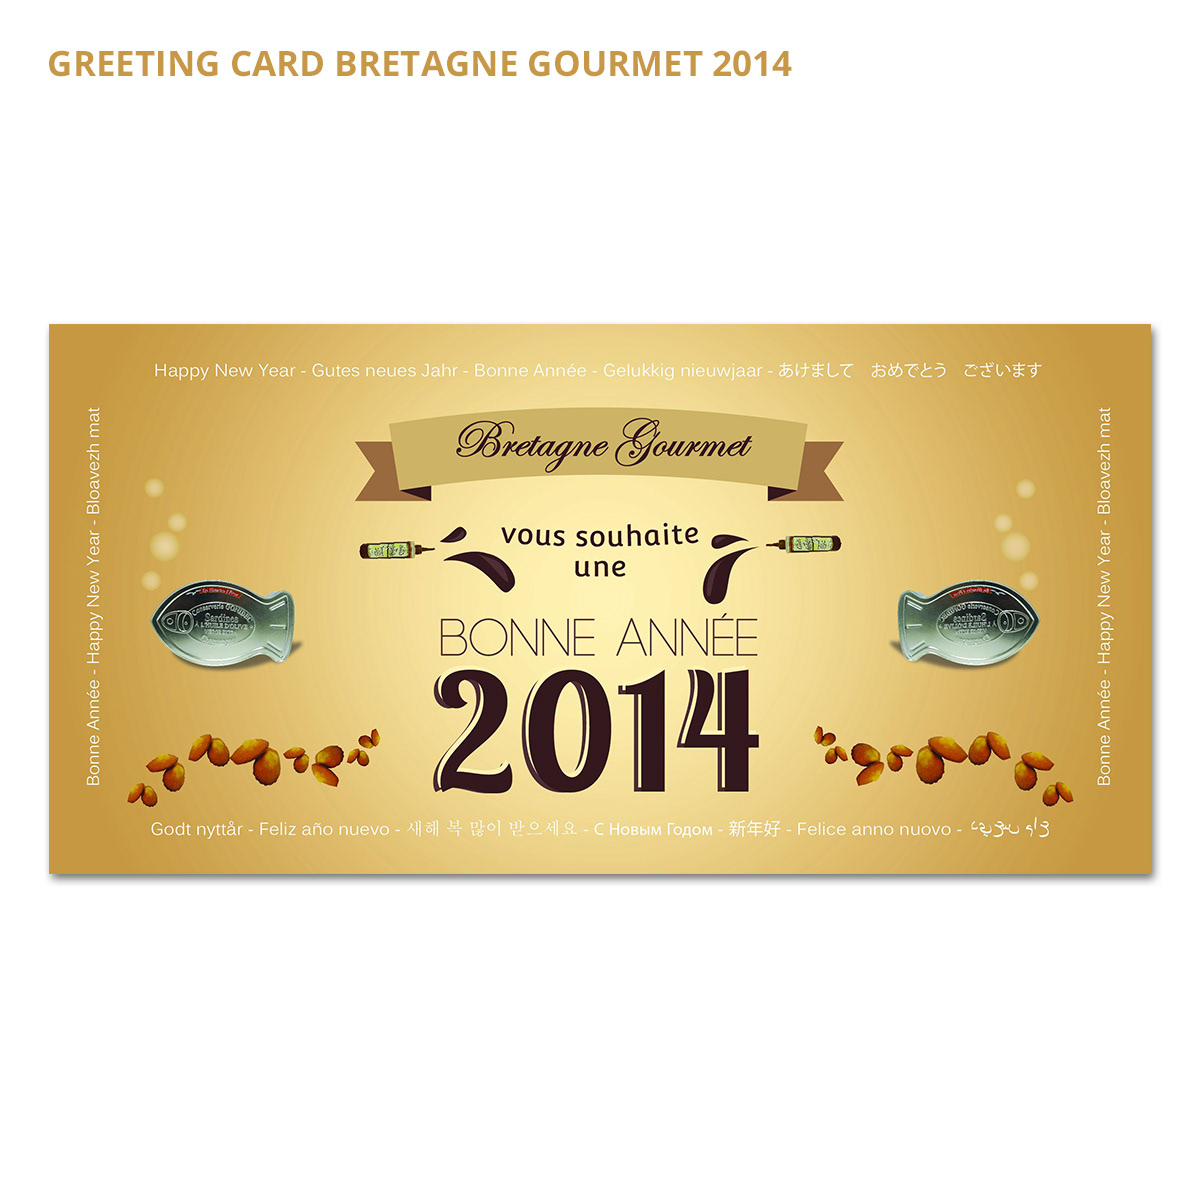 Bretagne Gourmet greeting card carte de voeux bretagne rennes Food  breton products